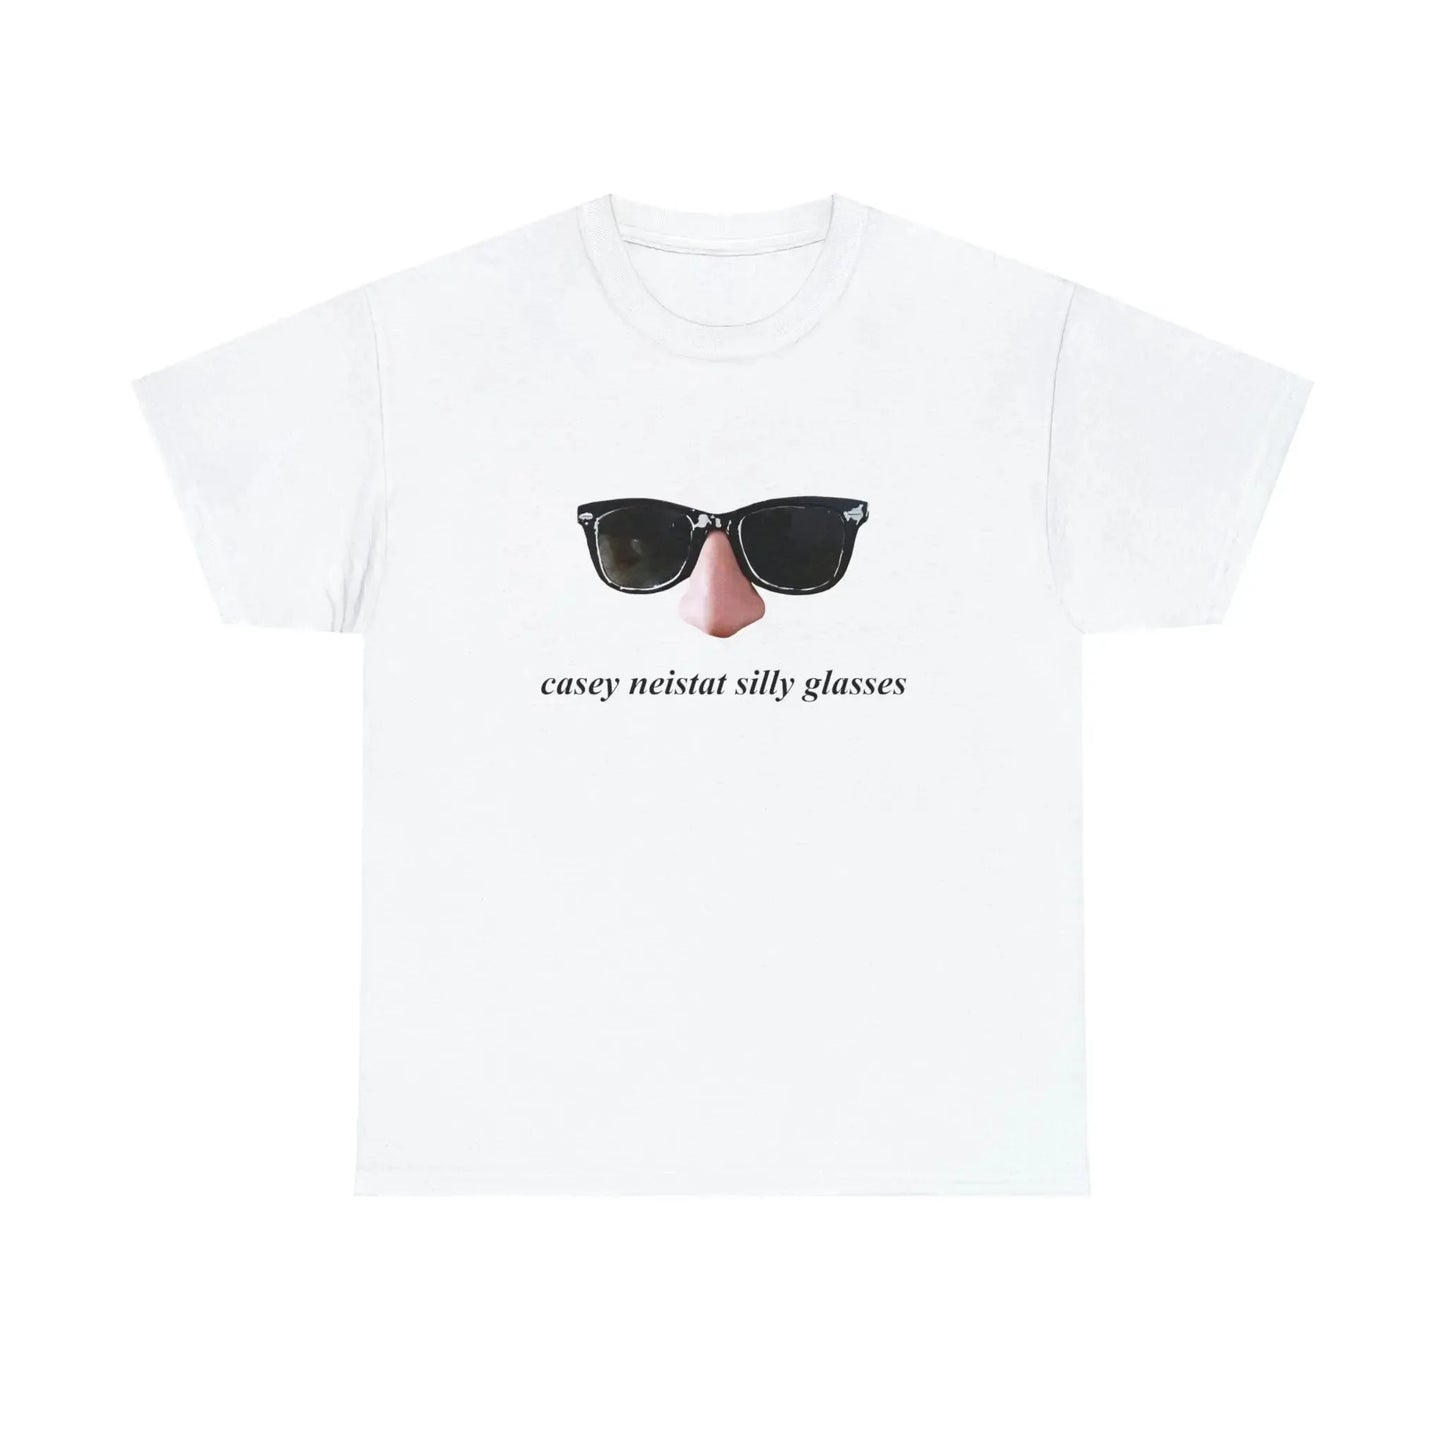 Casey Neistat Silly Glasses T-Shirt - Failure International failureinternational.com store brand tiktok instagram